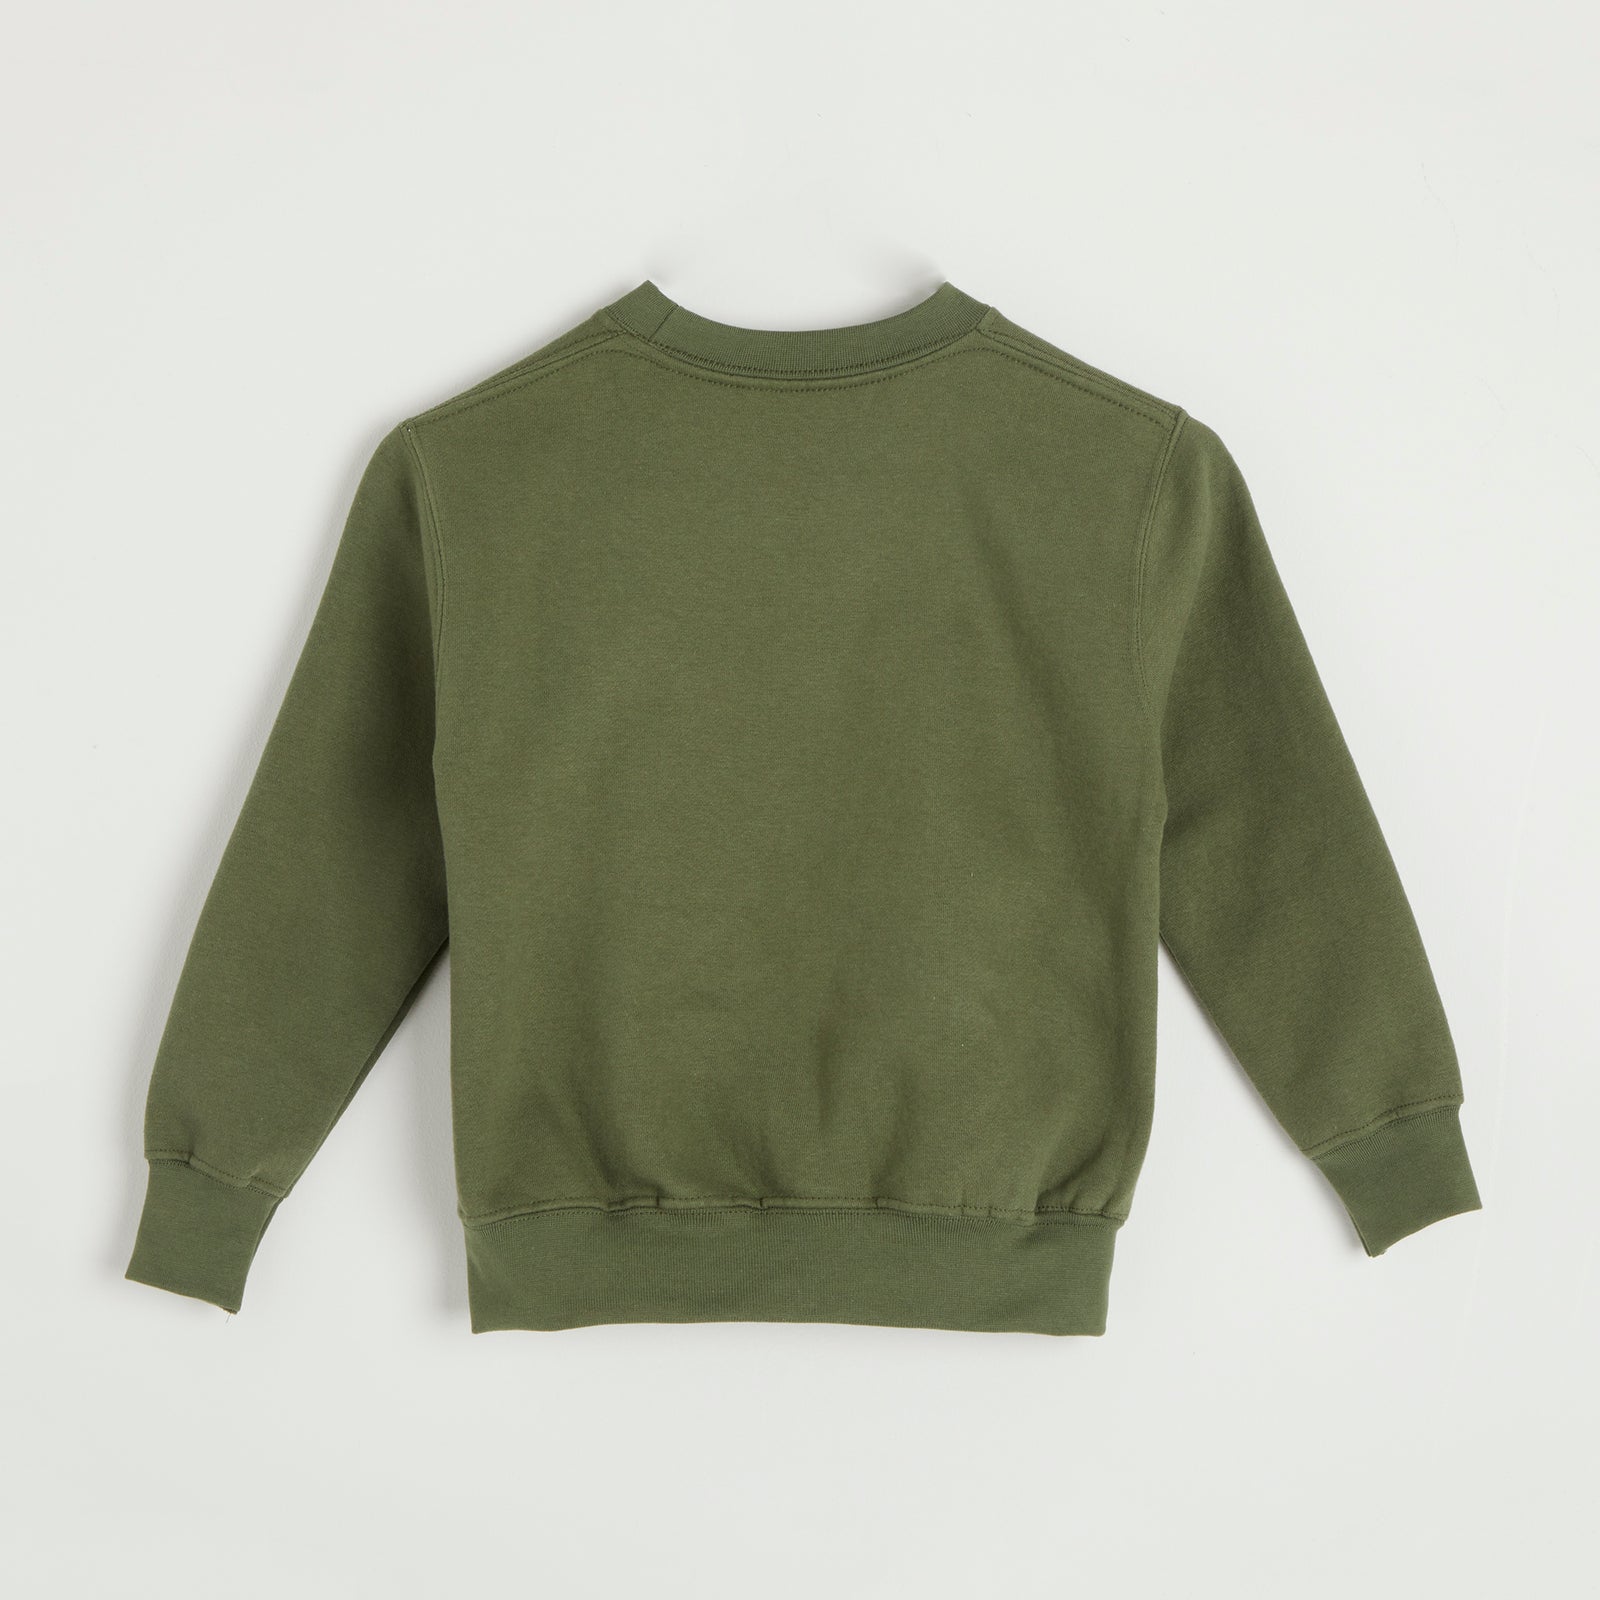 Personalised Khaki Varsity Letter Sweater